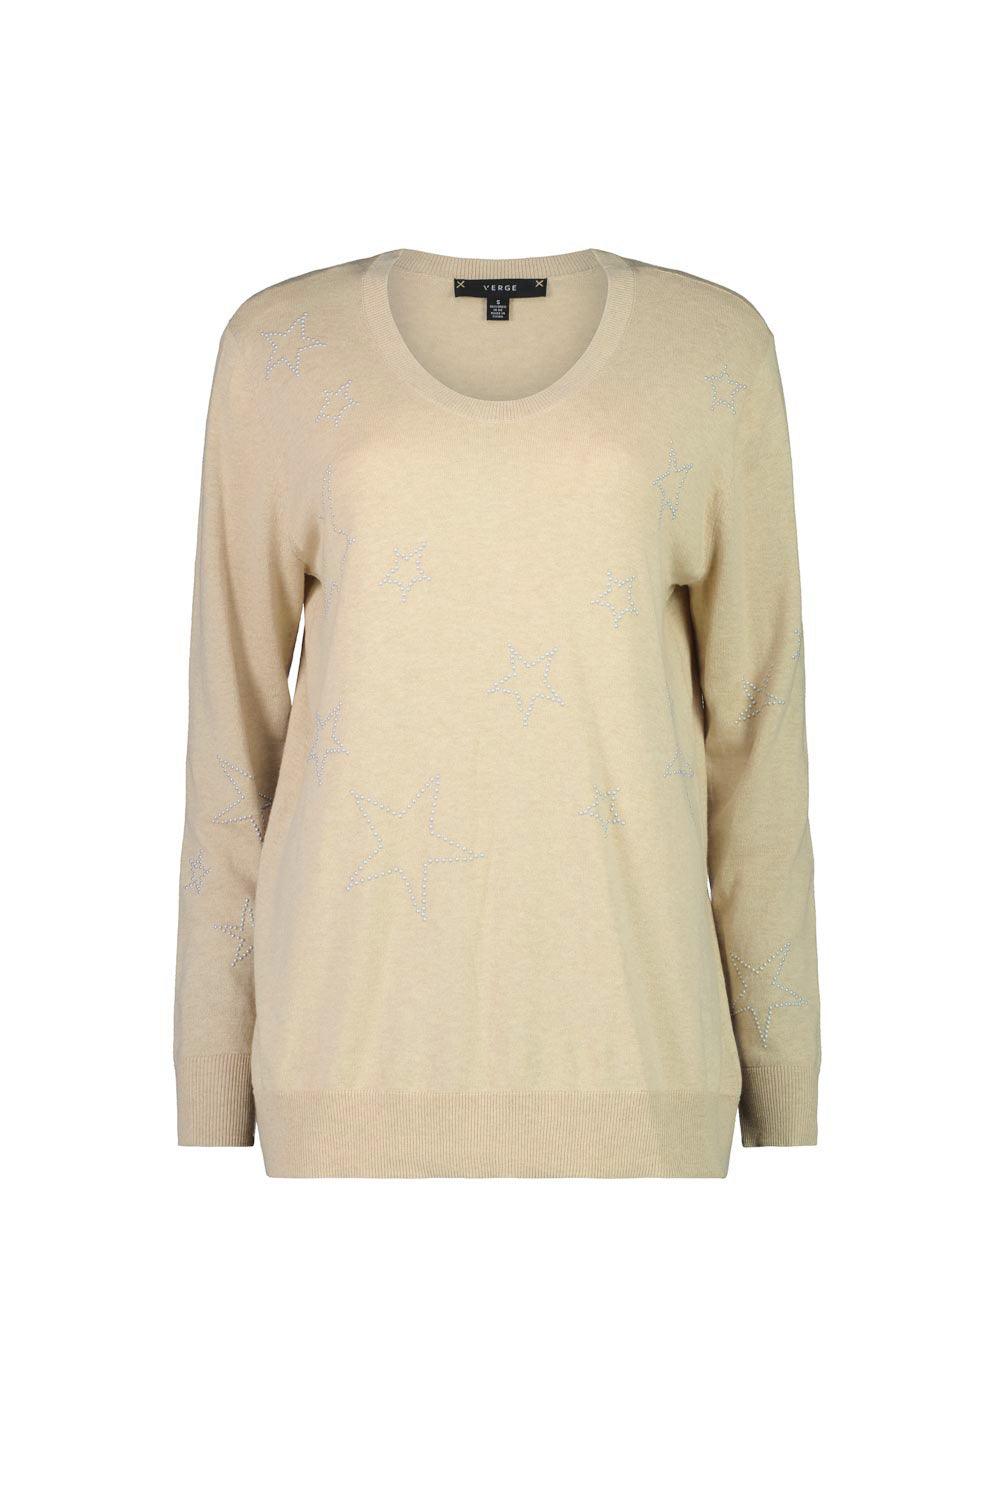 Comet Sweater - Sable - Sweater VERGE